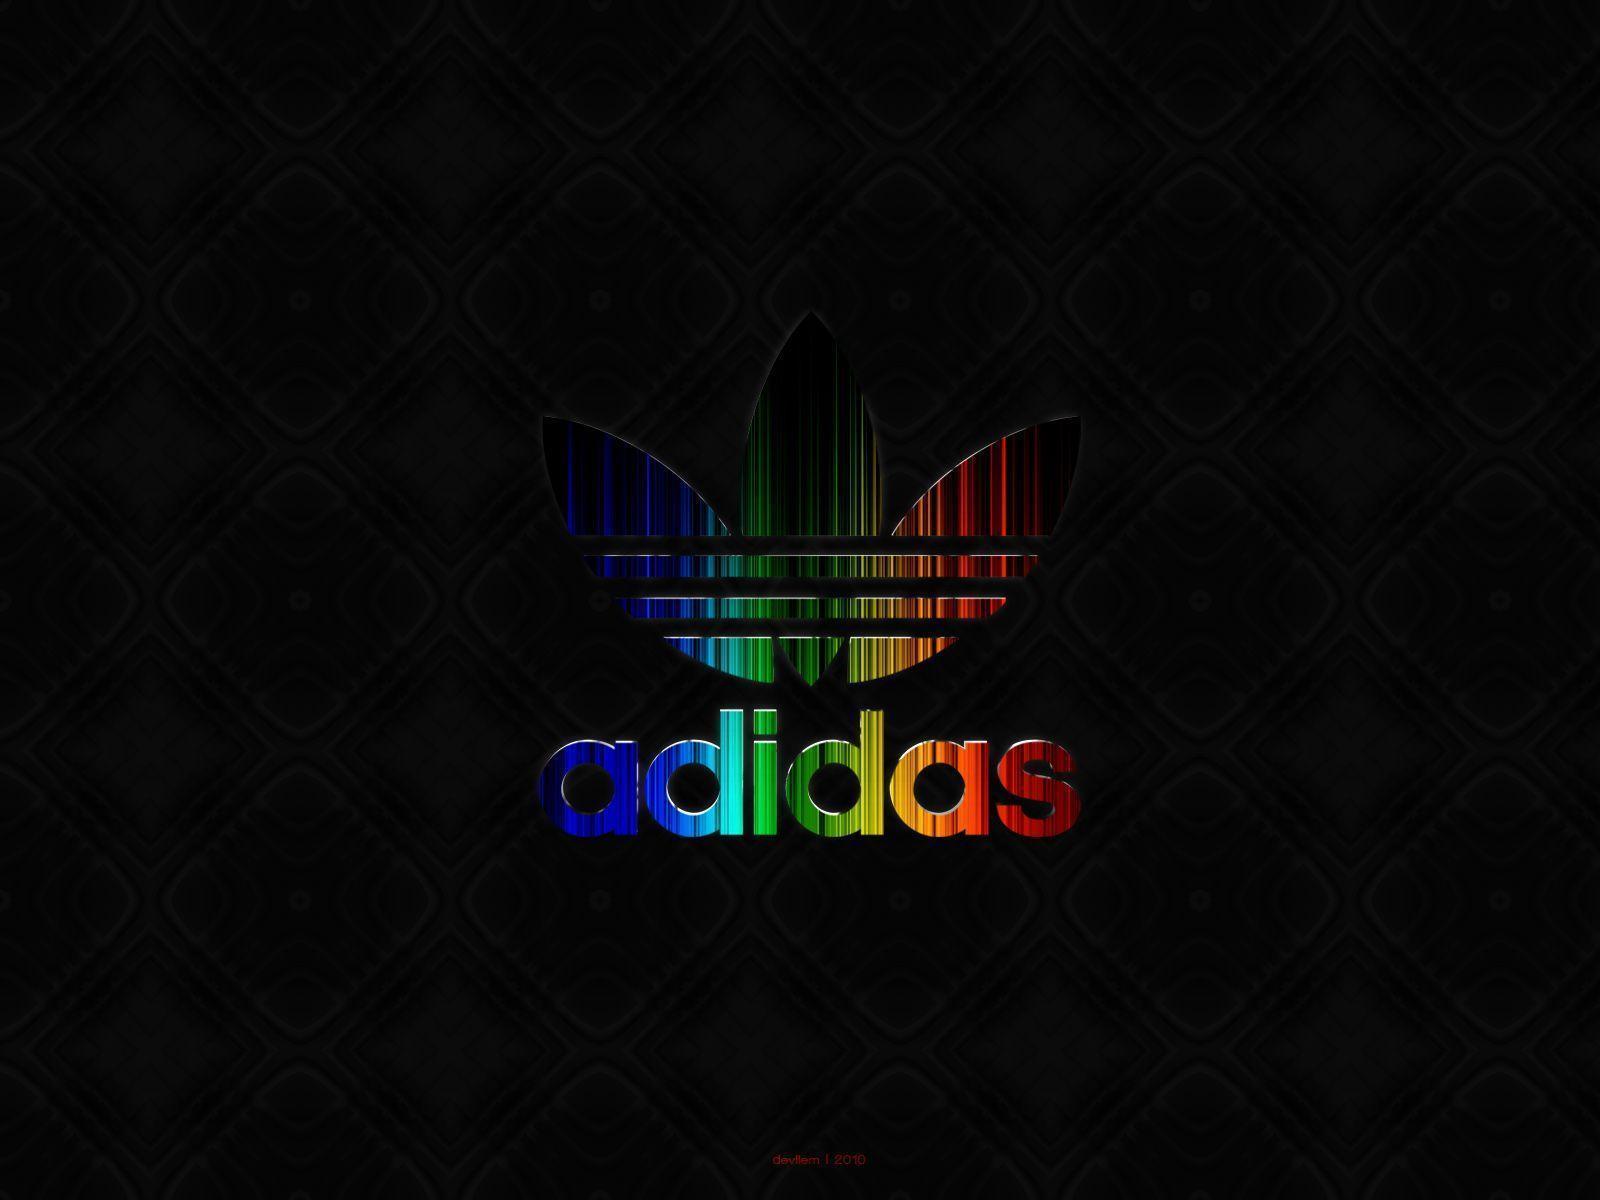 adidas wallpaper free download